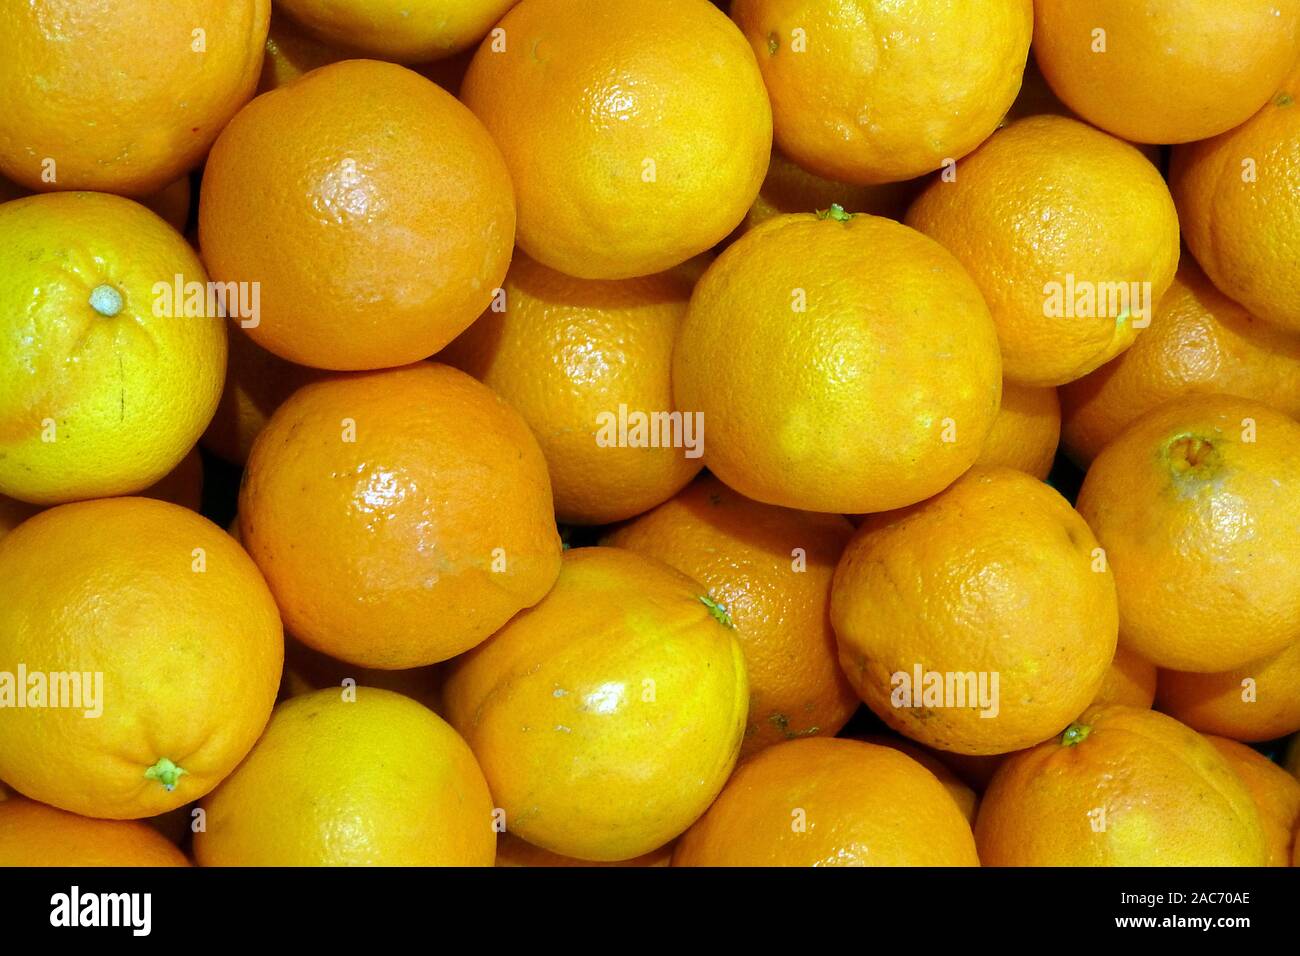 Orangen - Apfelsinen Stock Photo